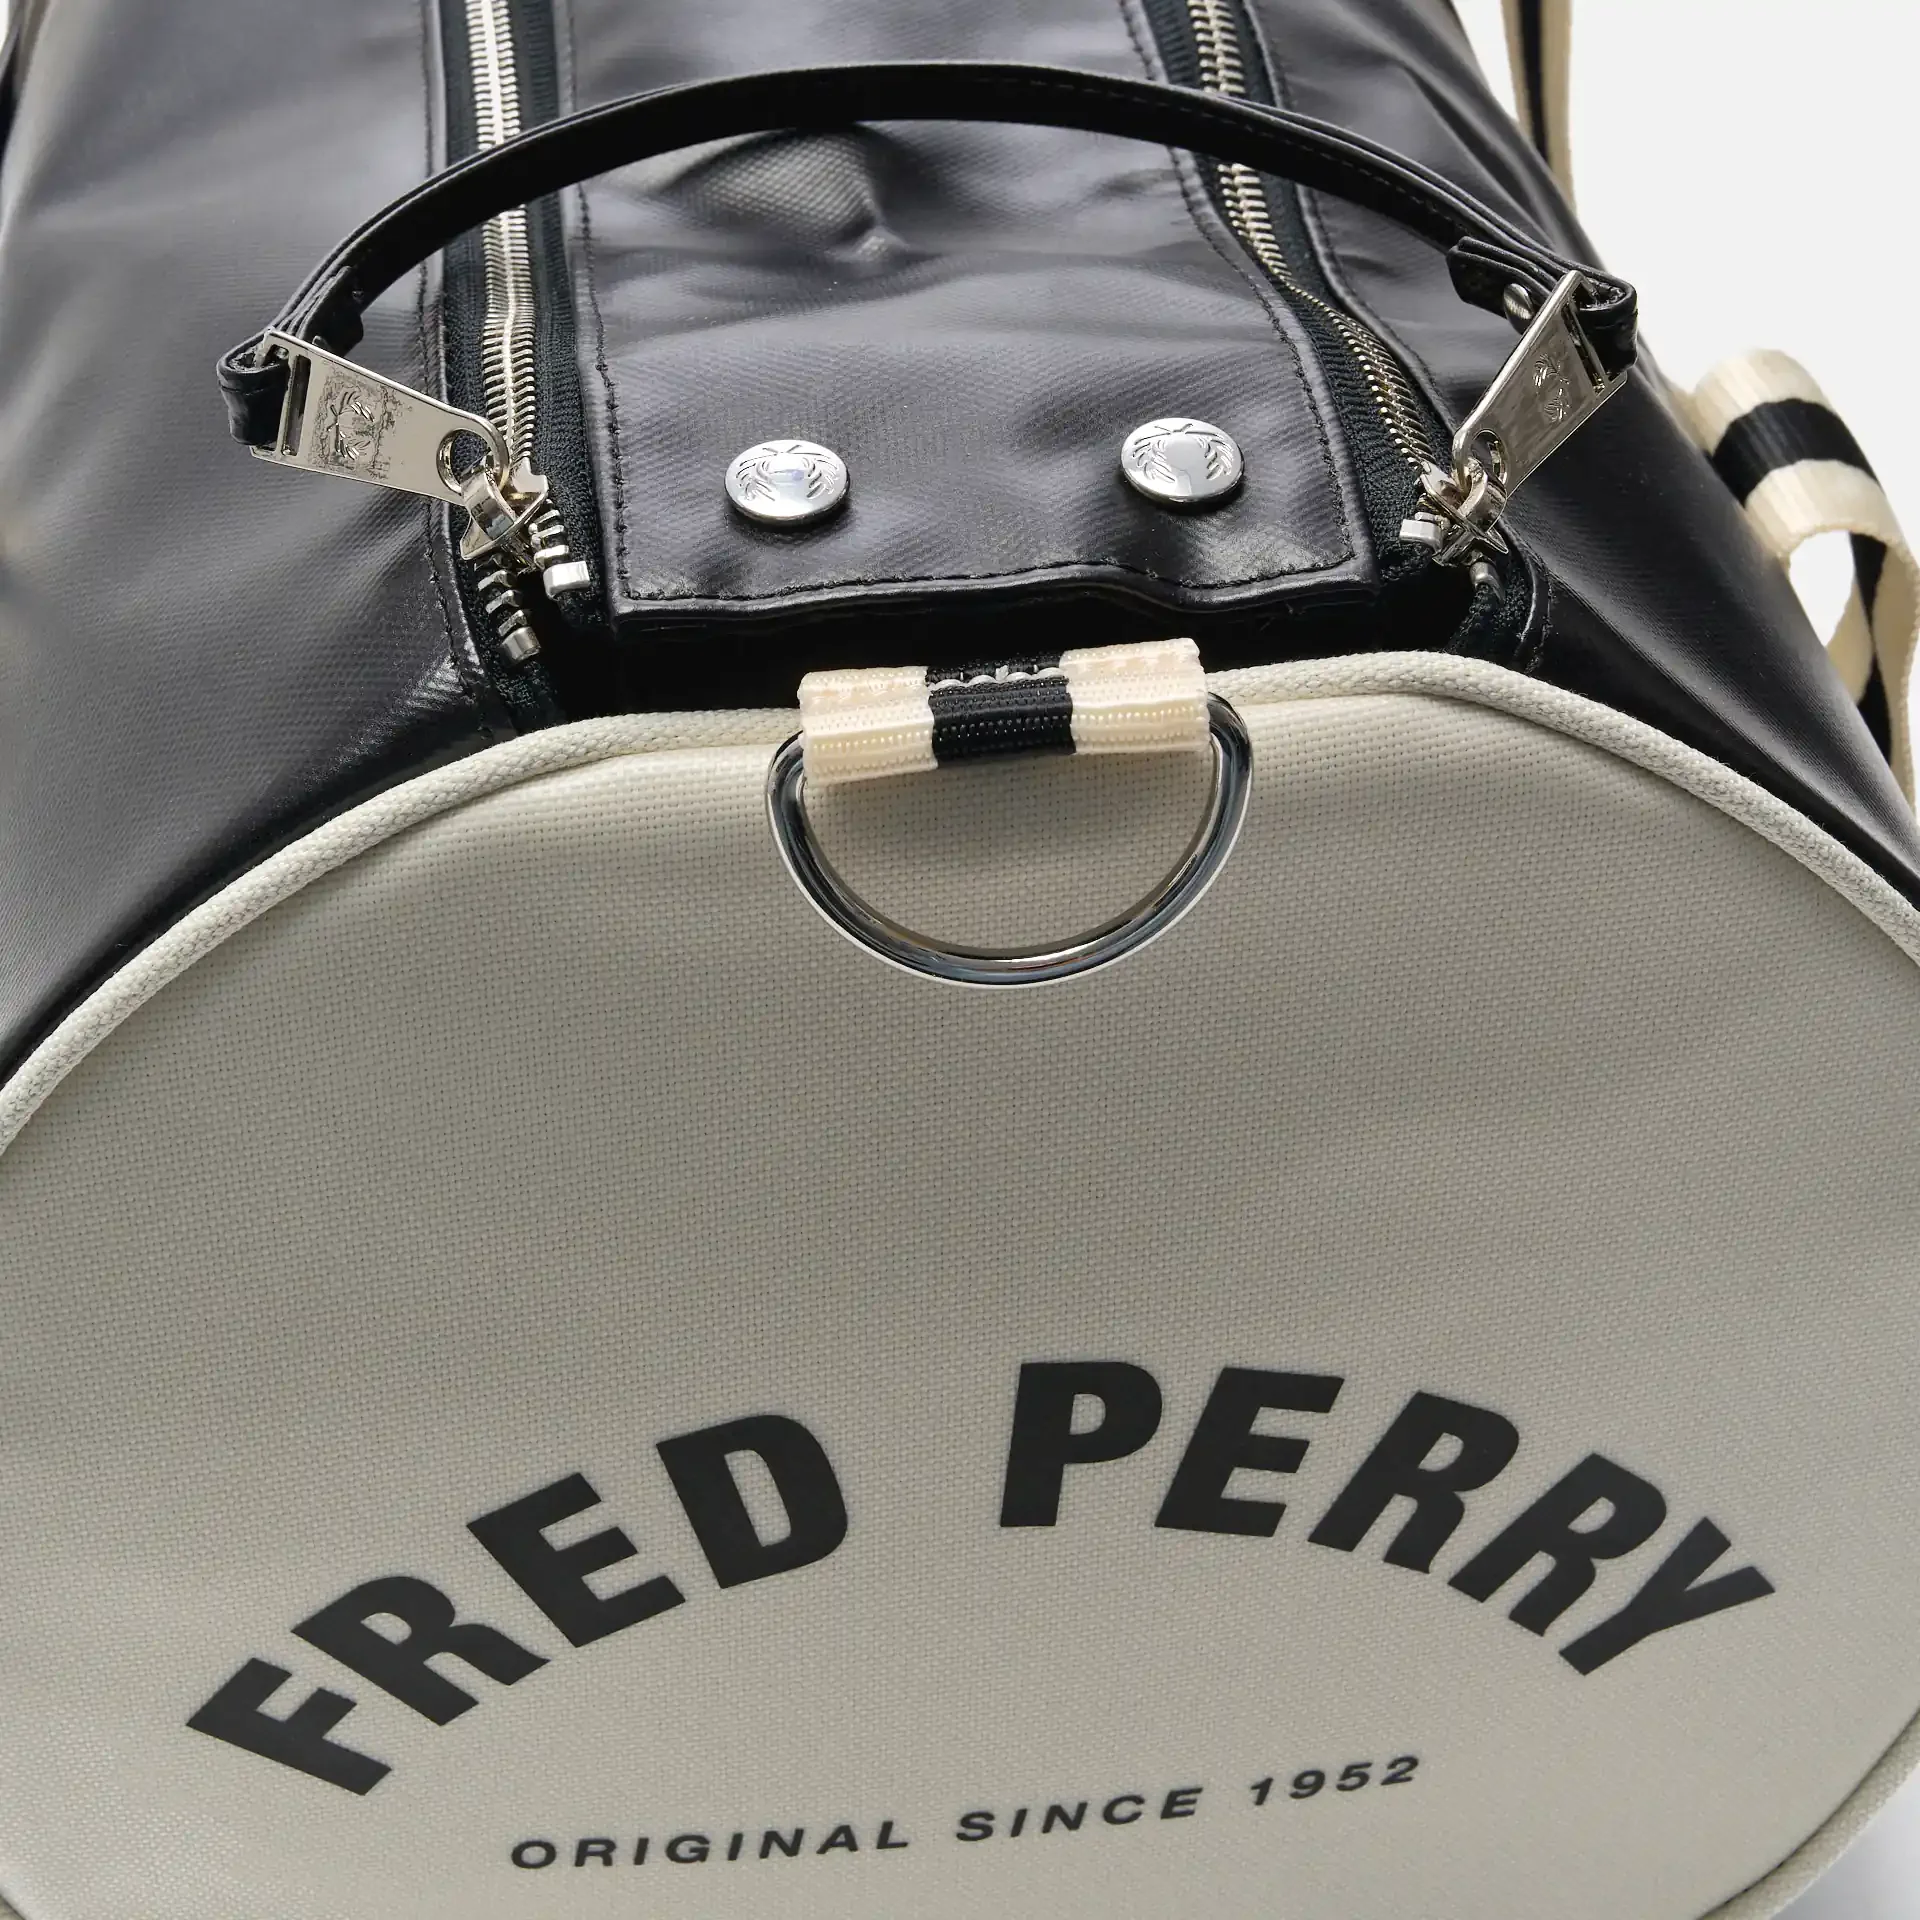 Fred Perry Classic Barrel Bag Black/Ecru